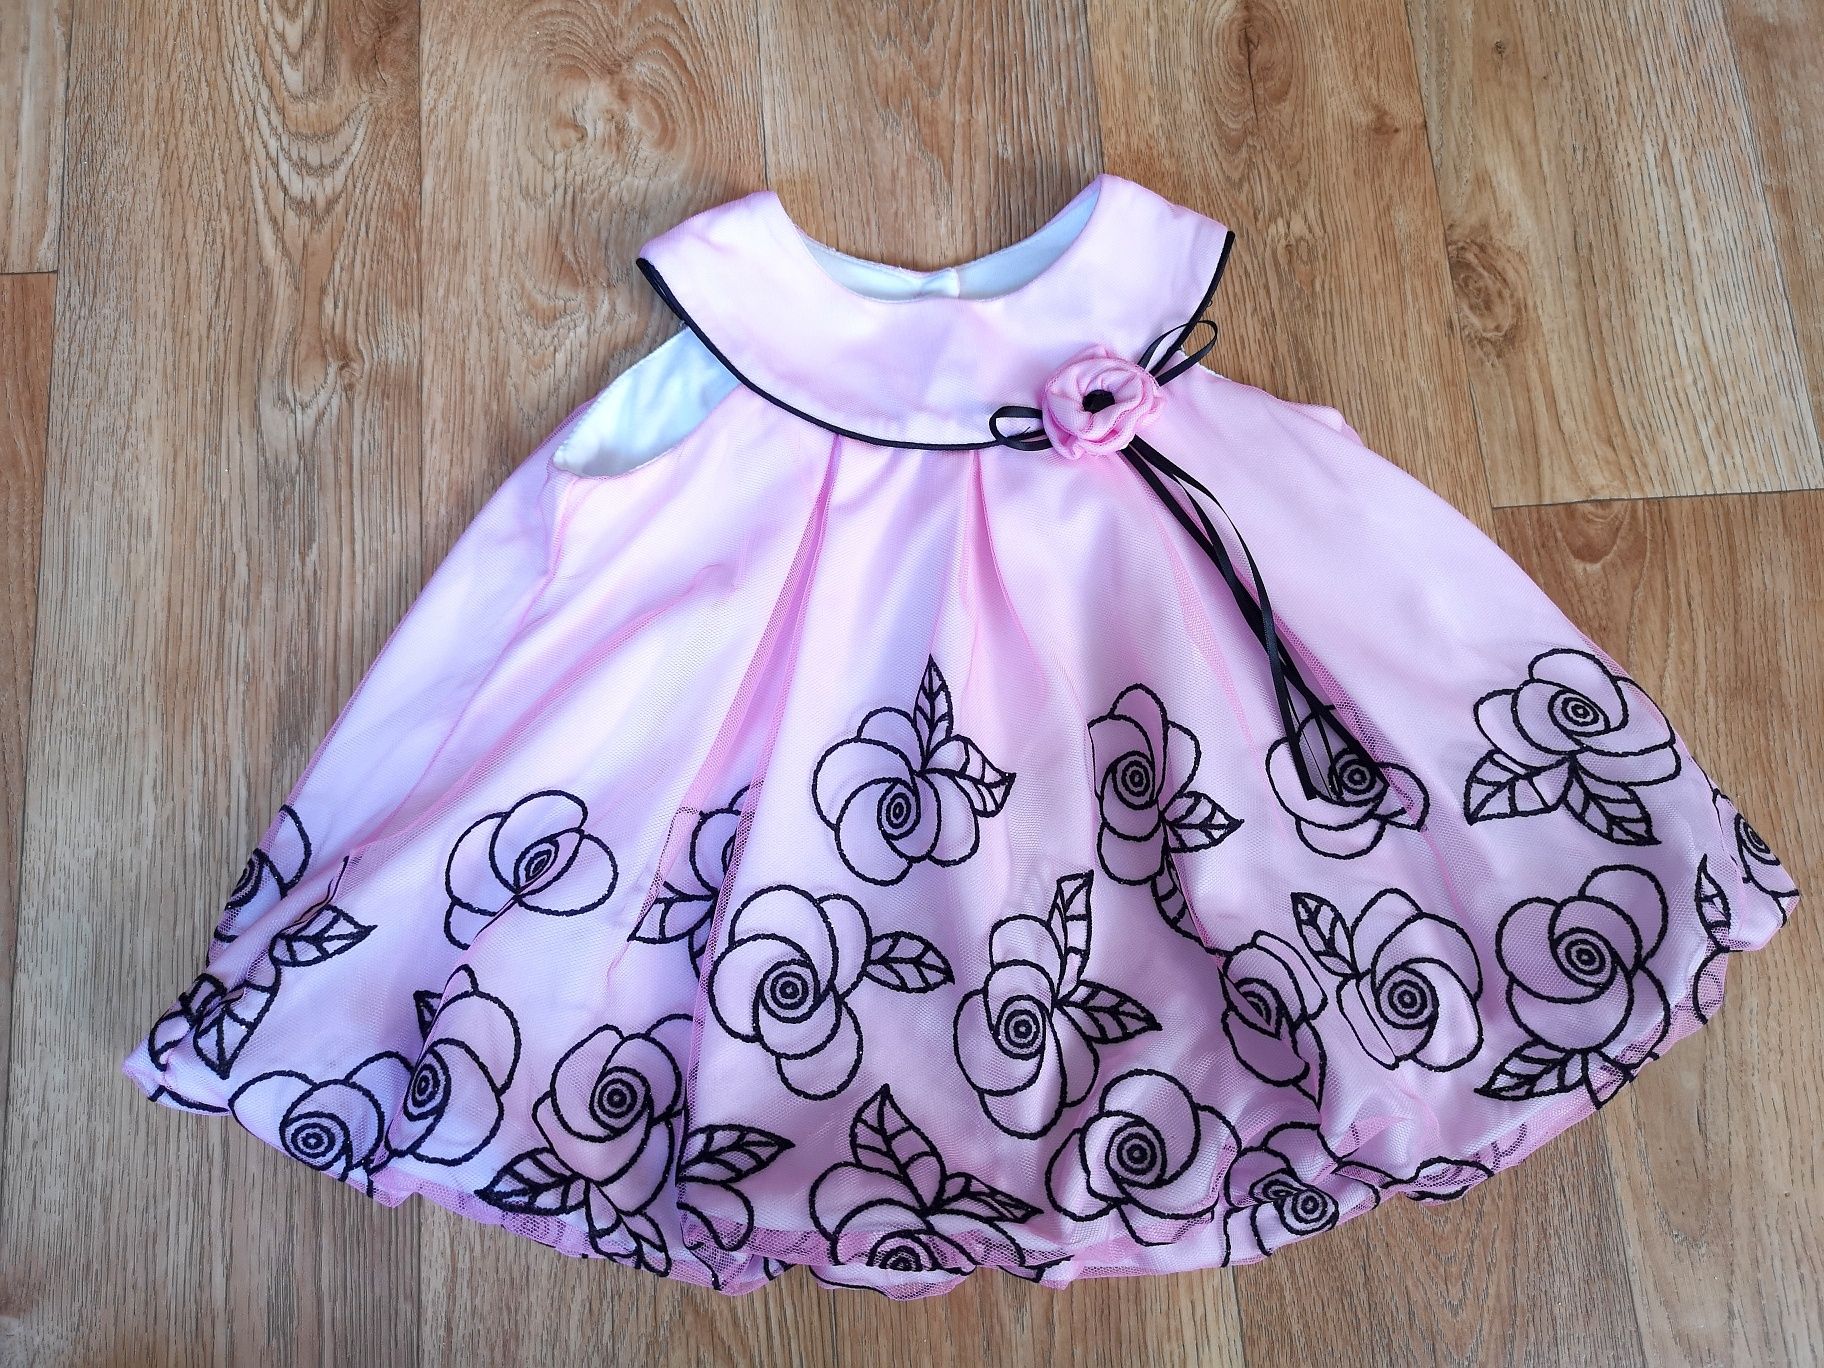 Бебешка рокличка Детска рокля за повод Официална Елегантна розова 6-12